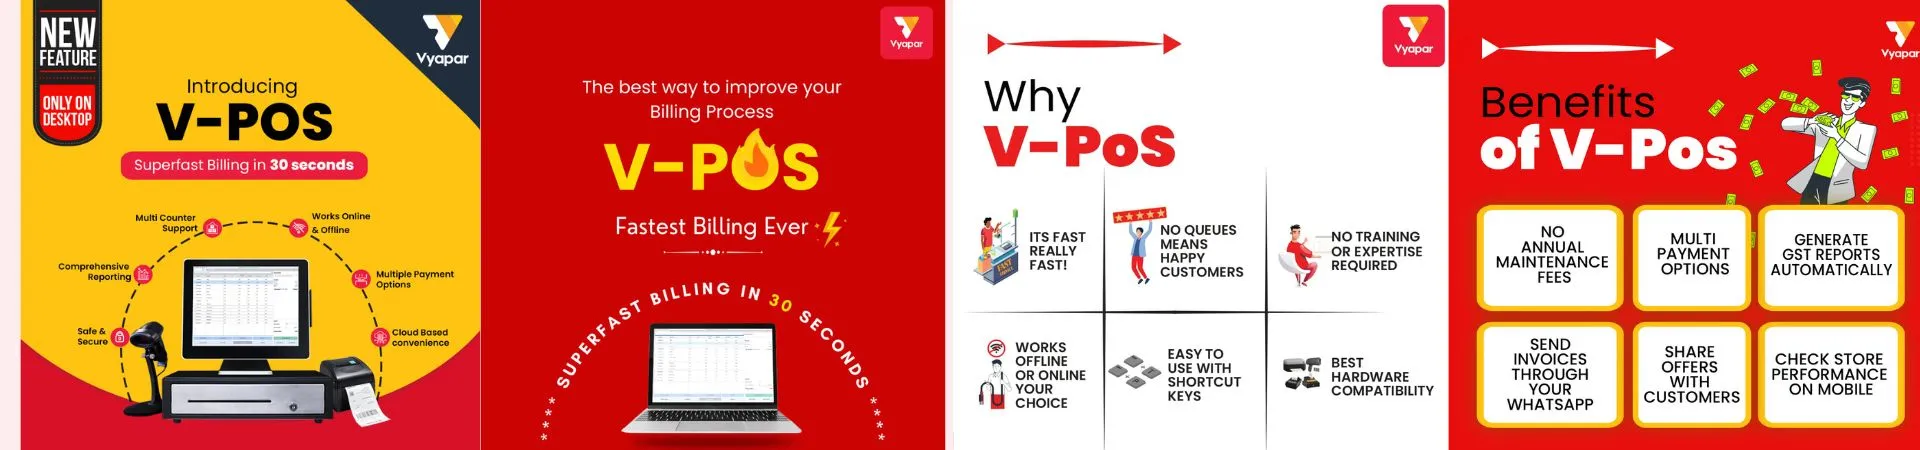 VPOS Benefits